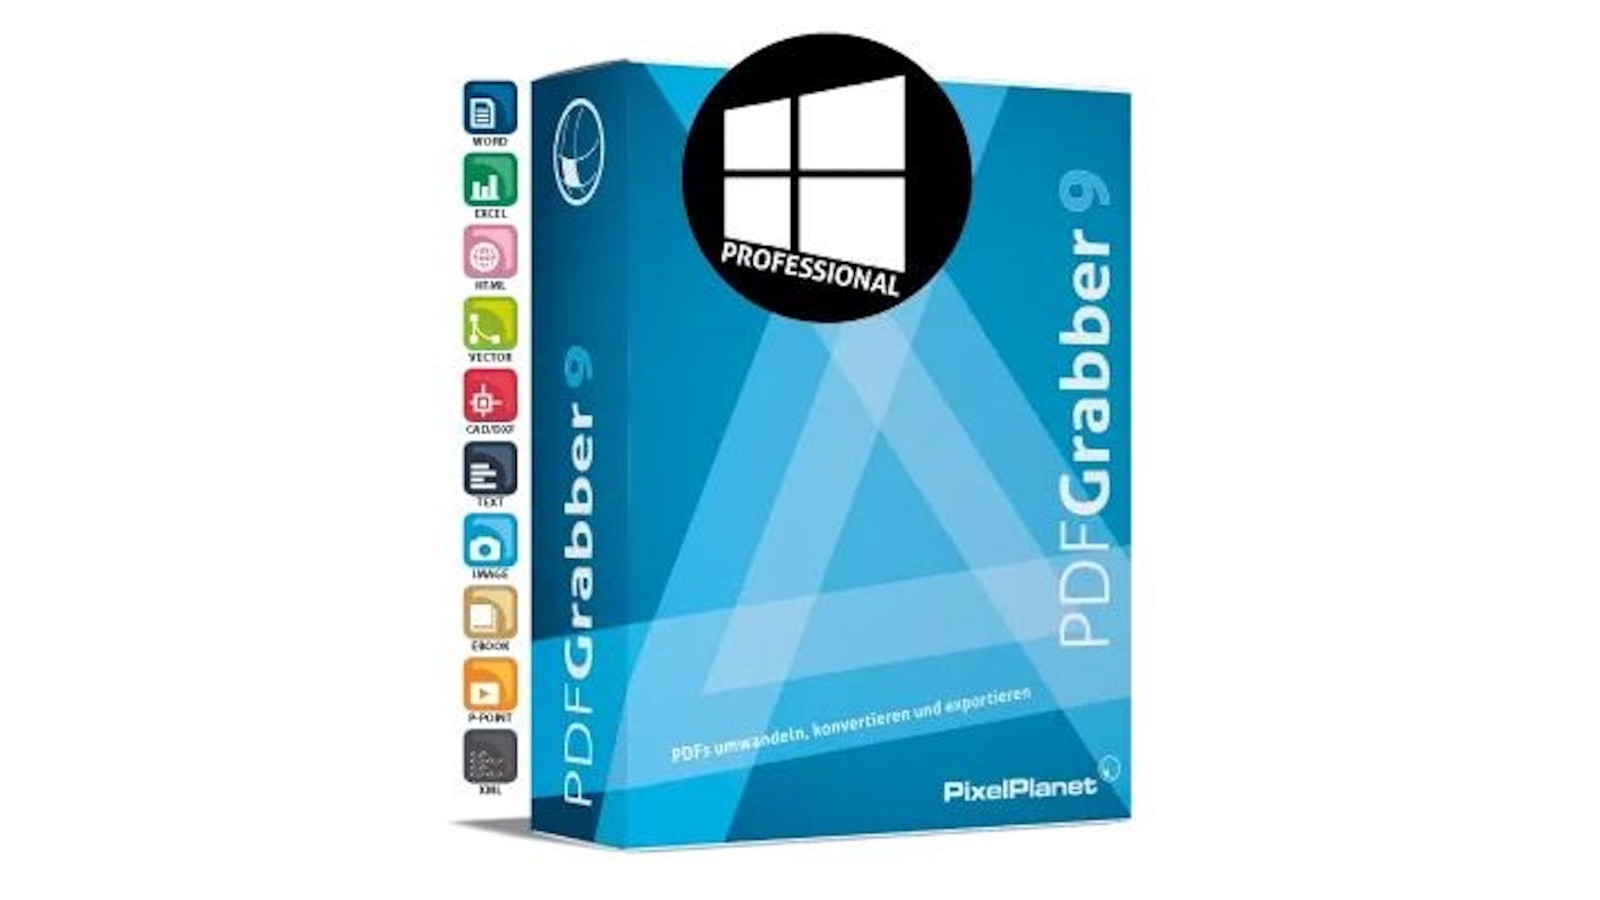 PixelPlanet PdfGrabber 9 Professional Network Licence Key (Lifetime / 5 Users) $7.74